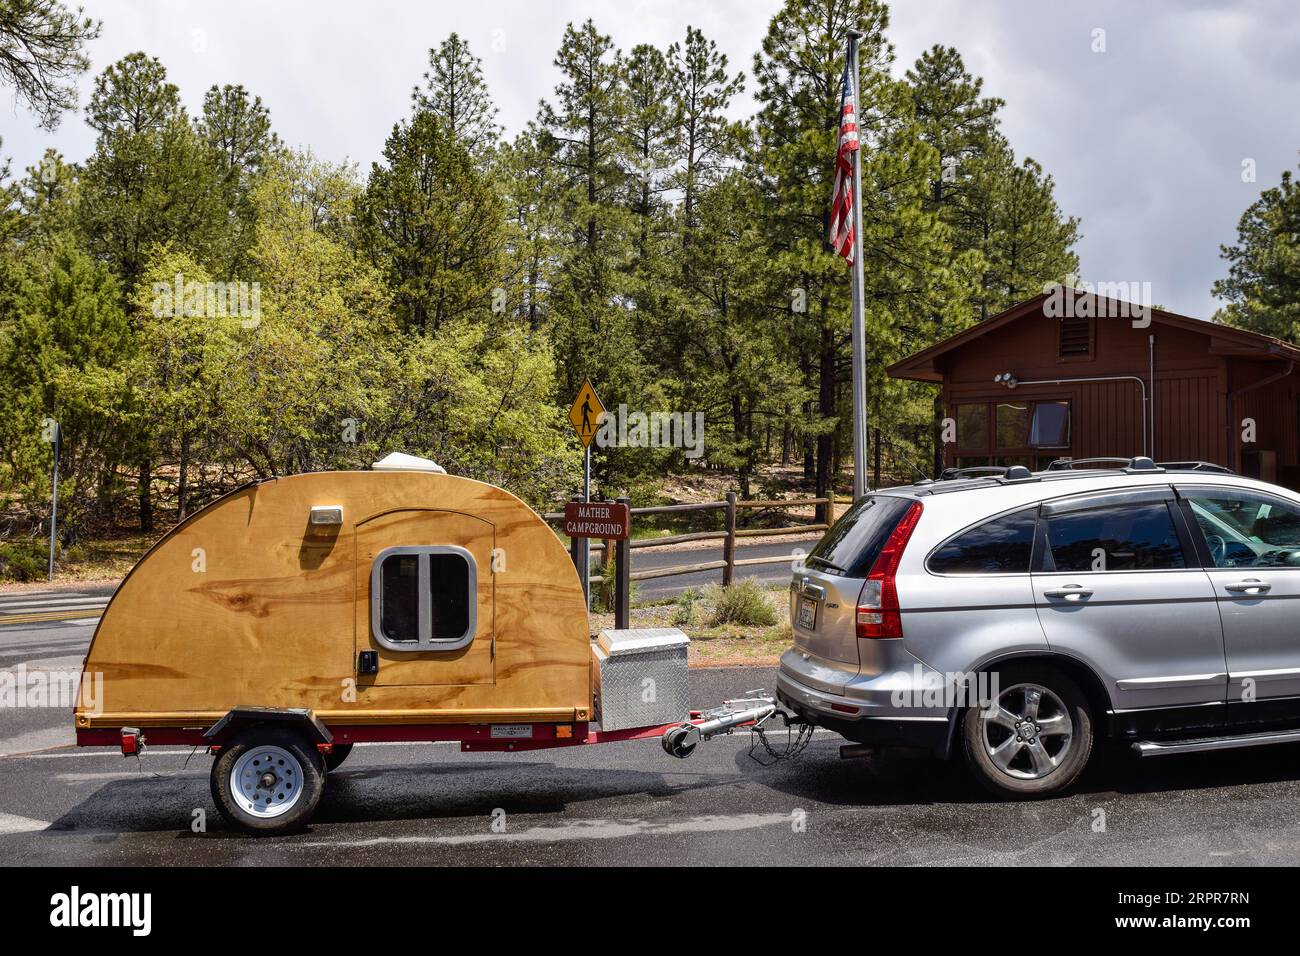 GRAND CANYON NATIONAL PARK, USA - MAY 29, 2015: Self-made teardrop camping trailer at a Grand Canyon campground. Camping is a popular way to visit thi Stock Photo